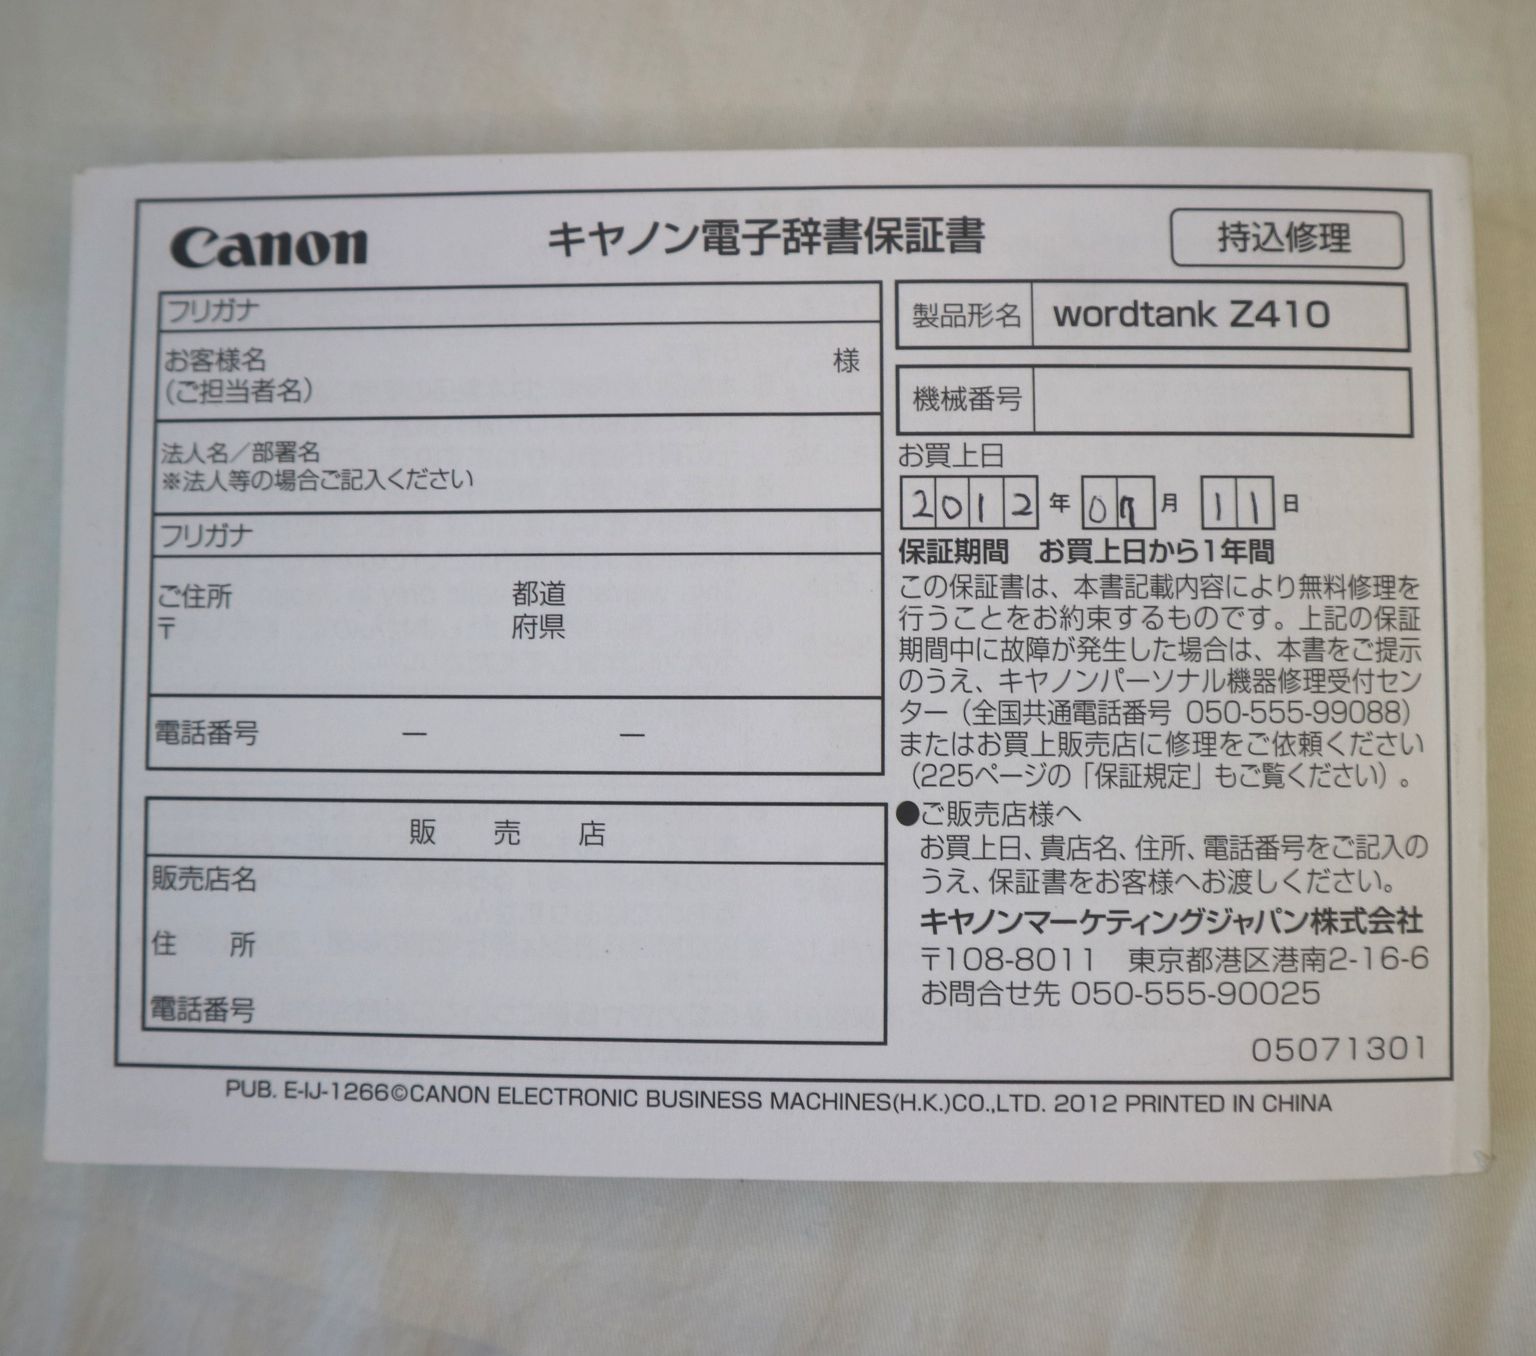 Canon 電子辞書 wordtank Z410BK 学生向け英語強化モデル 全面タッチパネル液晶 - 2